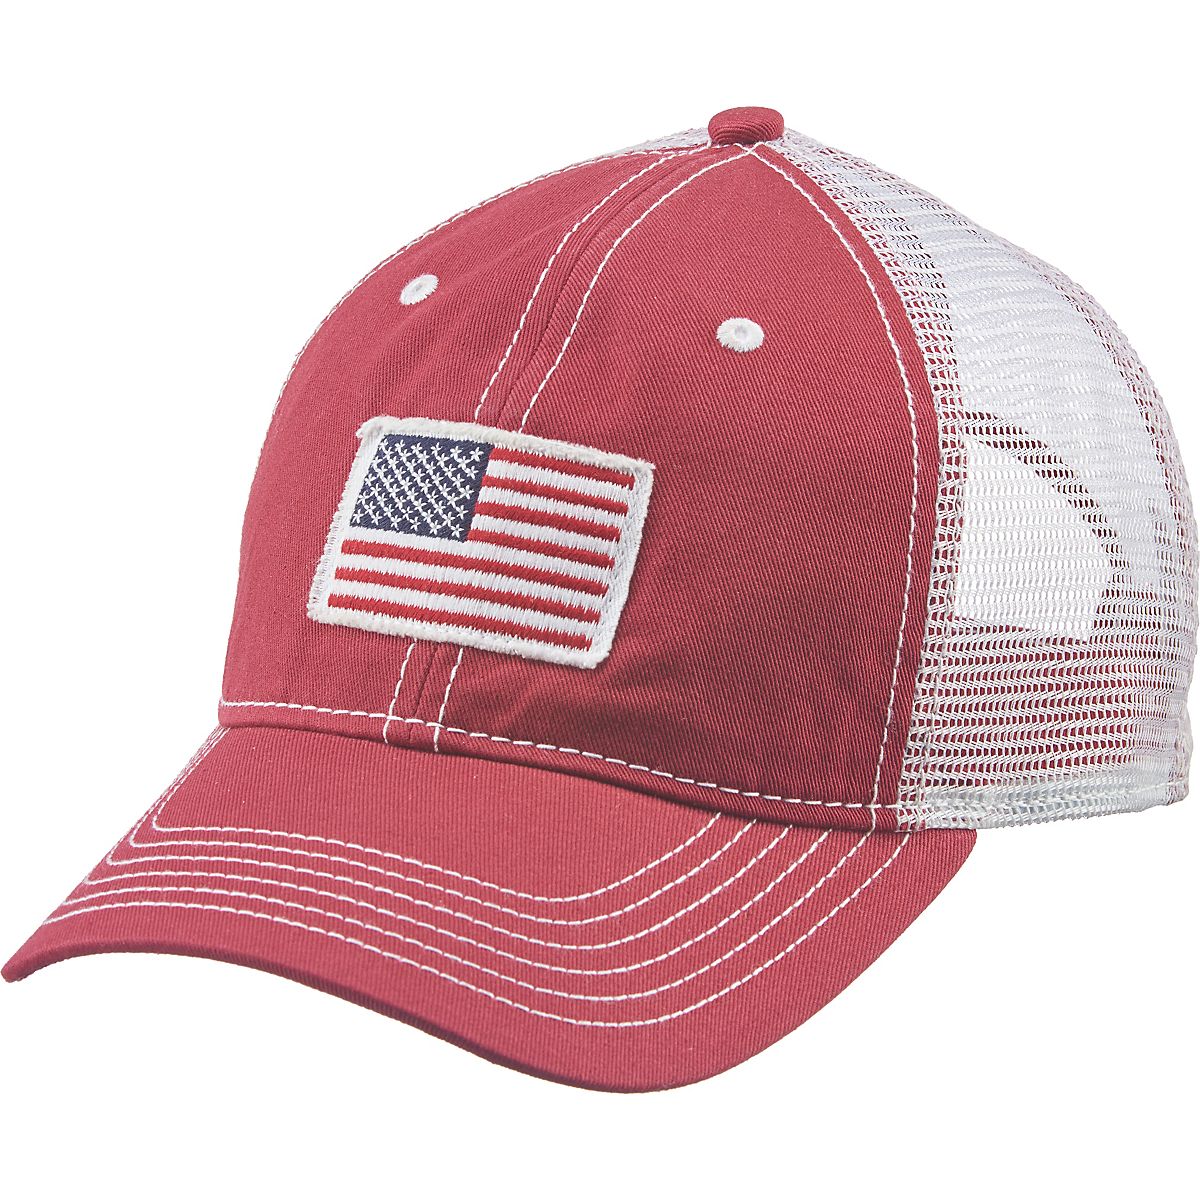  St. Louis City Flag Design Denim Cap Cotton Baseball Hat  Adjustable Vintage for Men Women : Sports & Outdoors